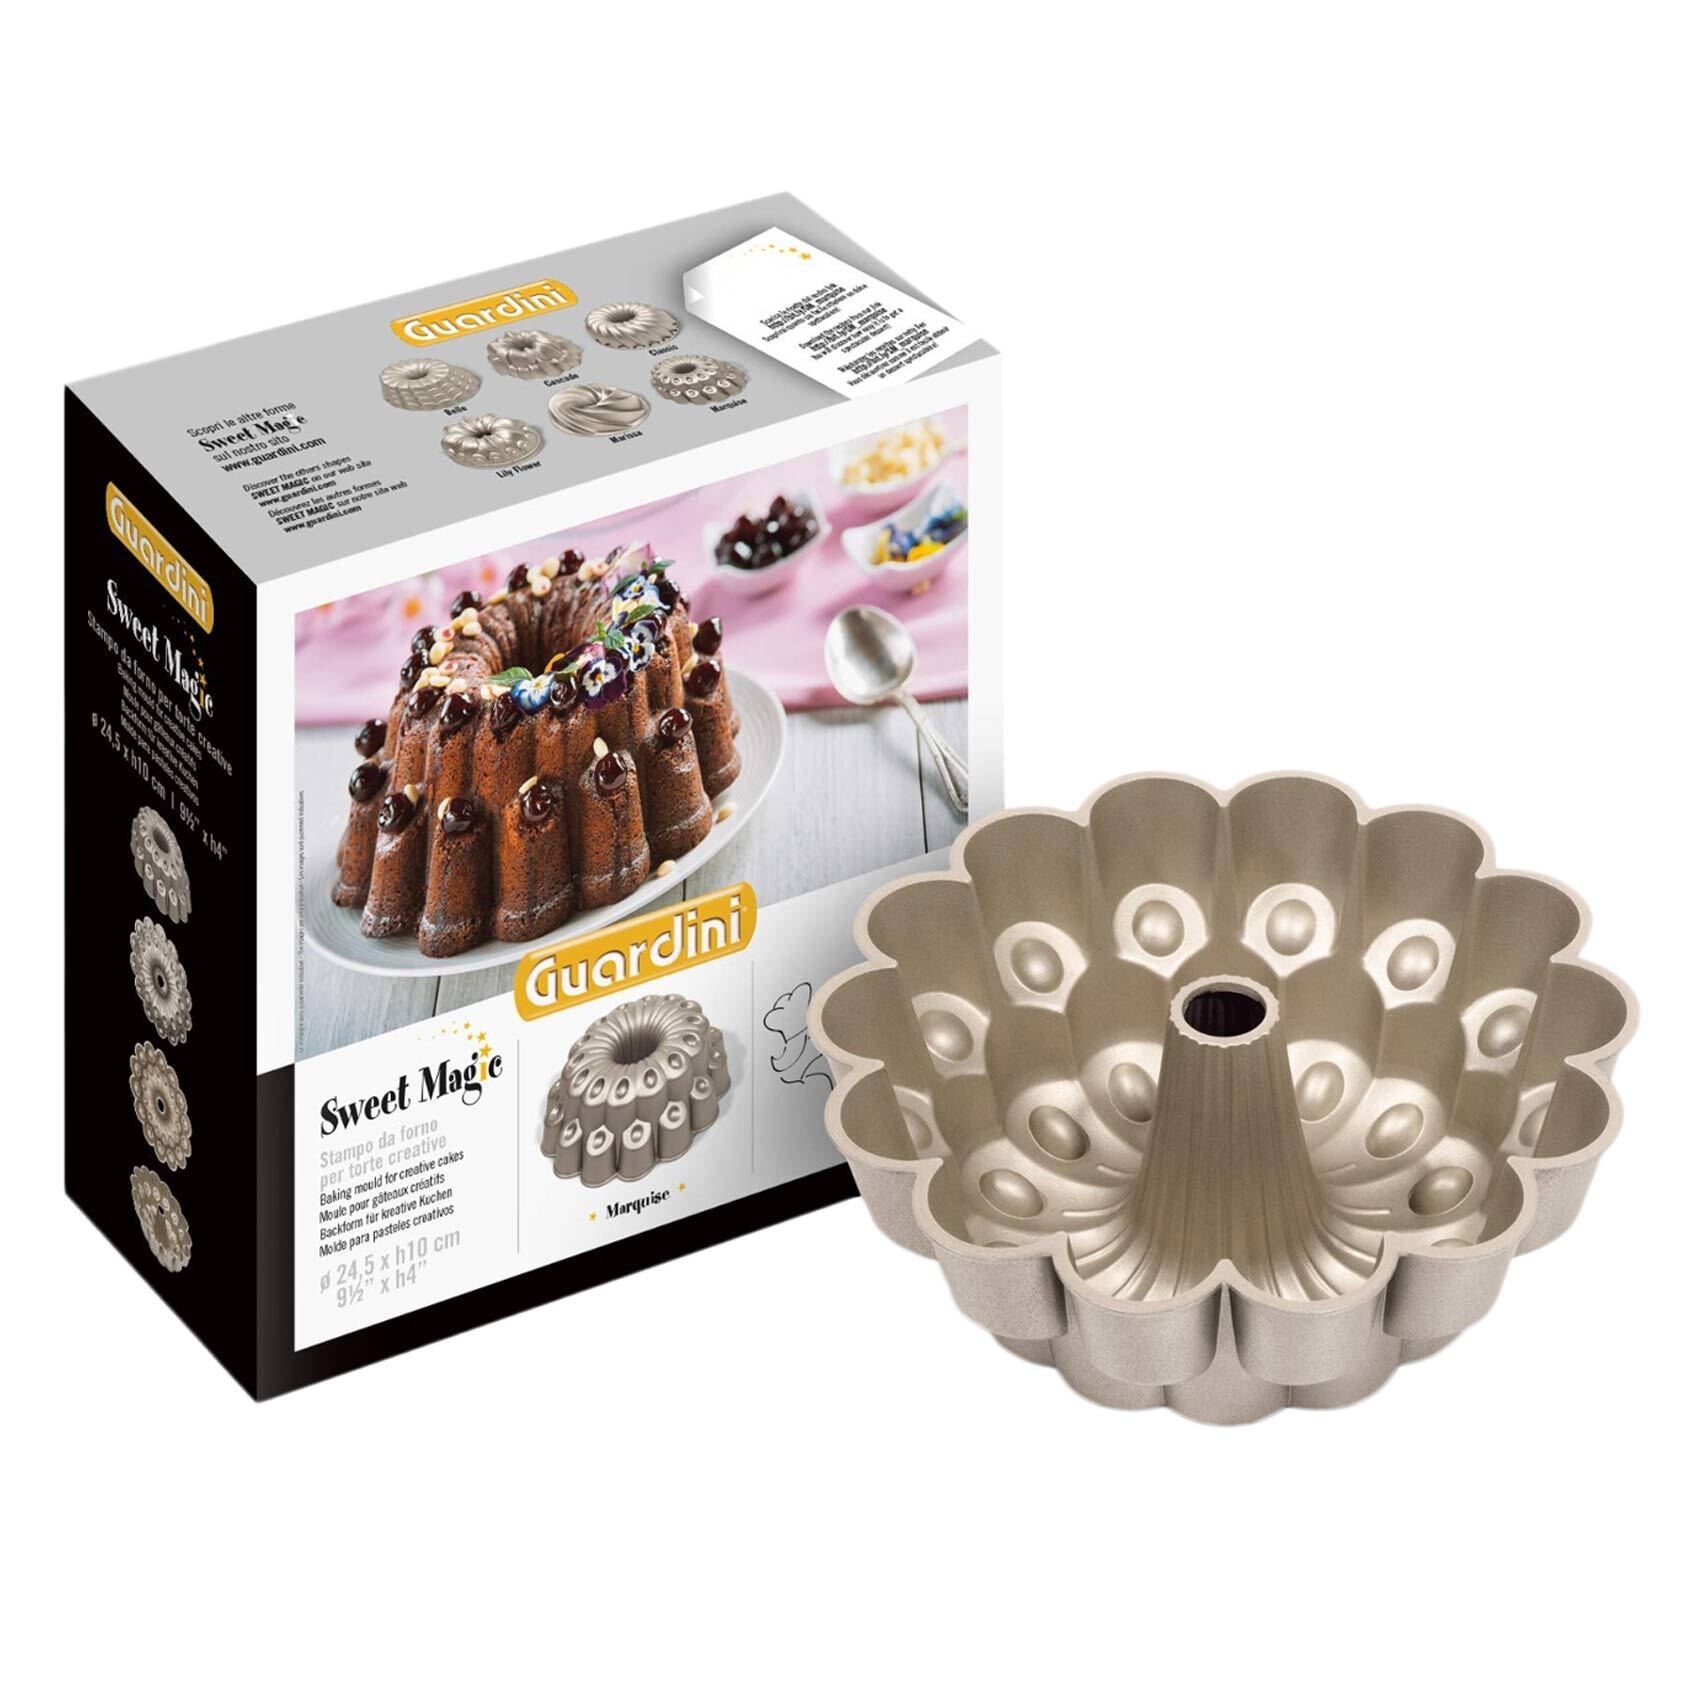 Buy English Cake Mold Aluminum Online - Shop Home & Garden on Carrefour  Jordan